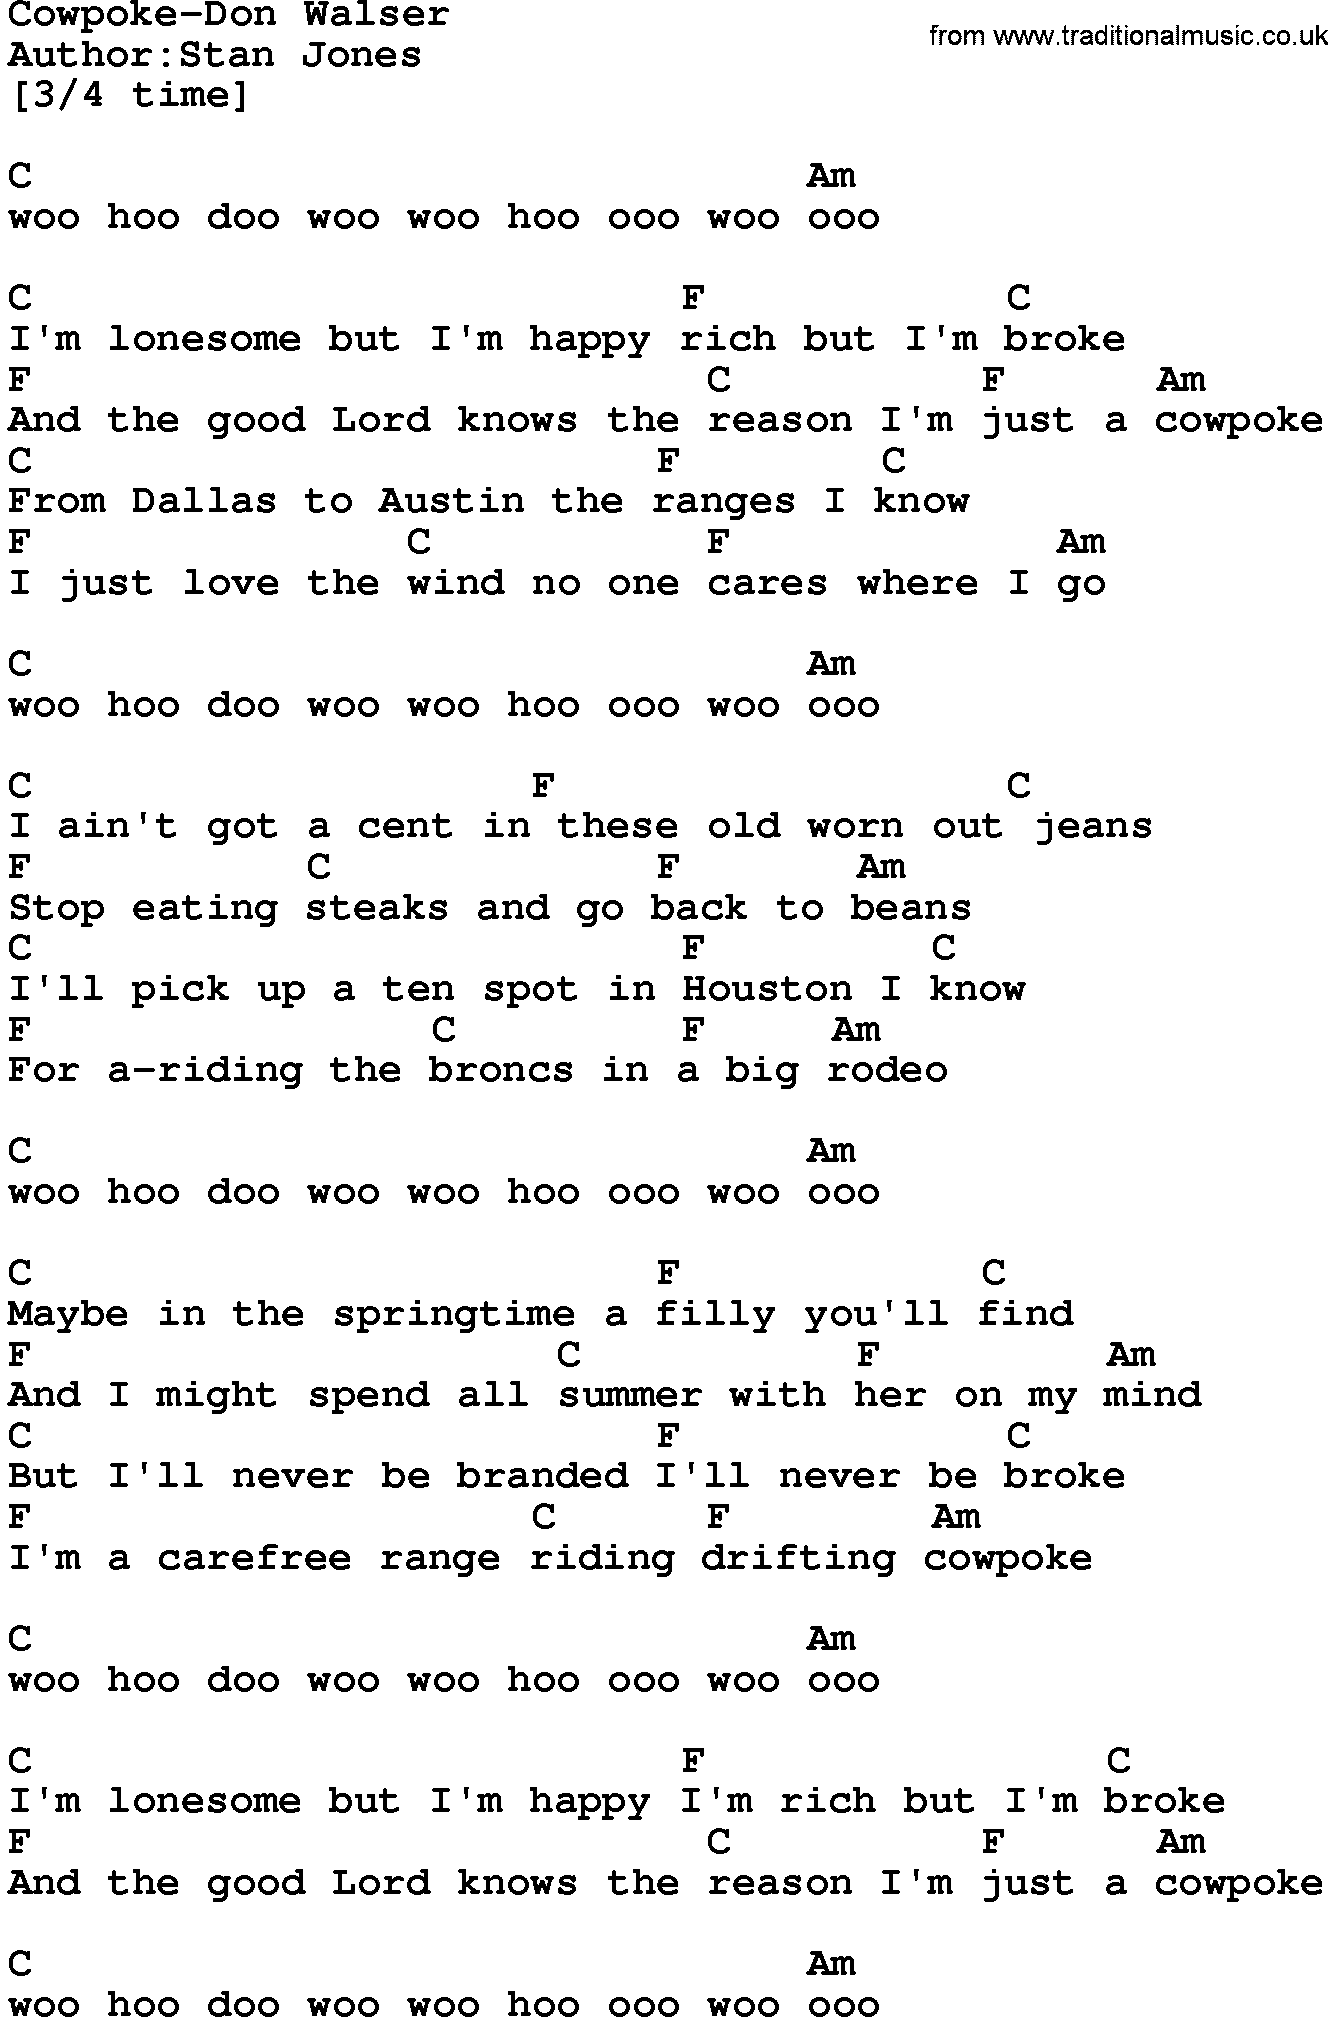 Country music song: Cowpoke-Don Walser lyrics and chords